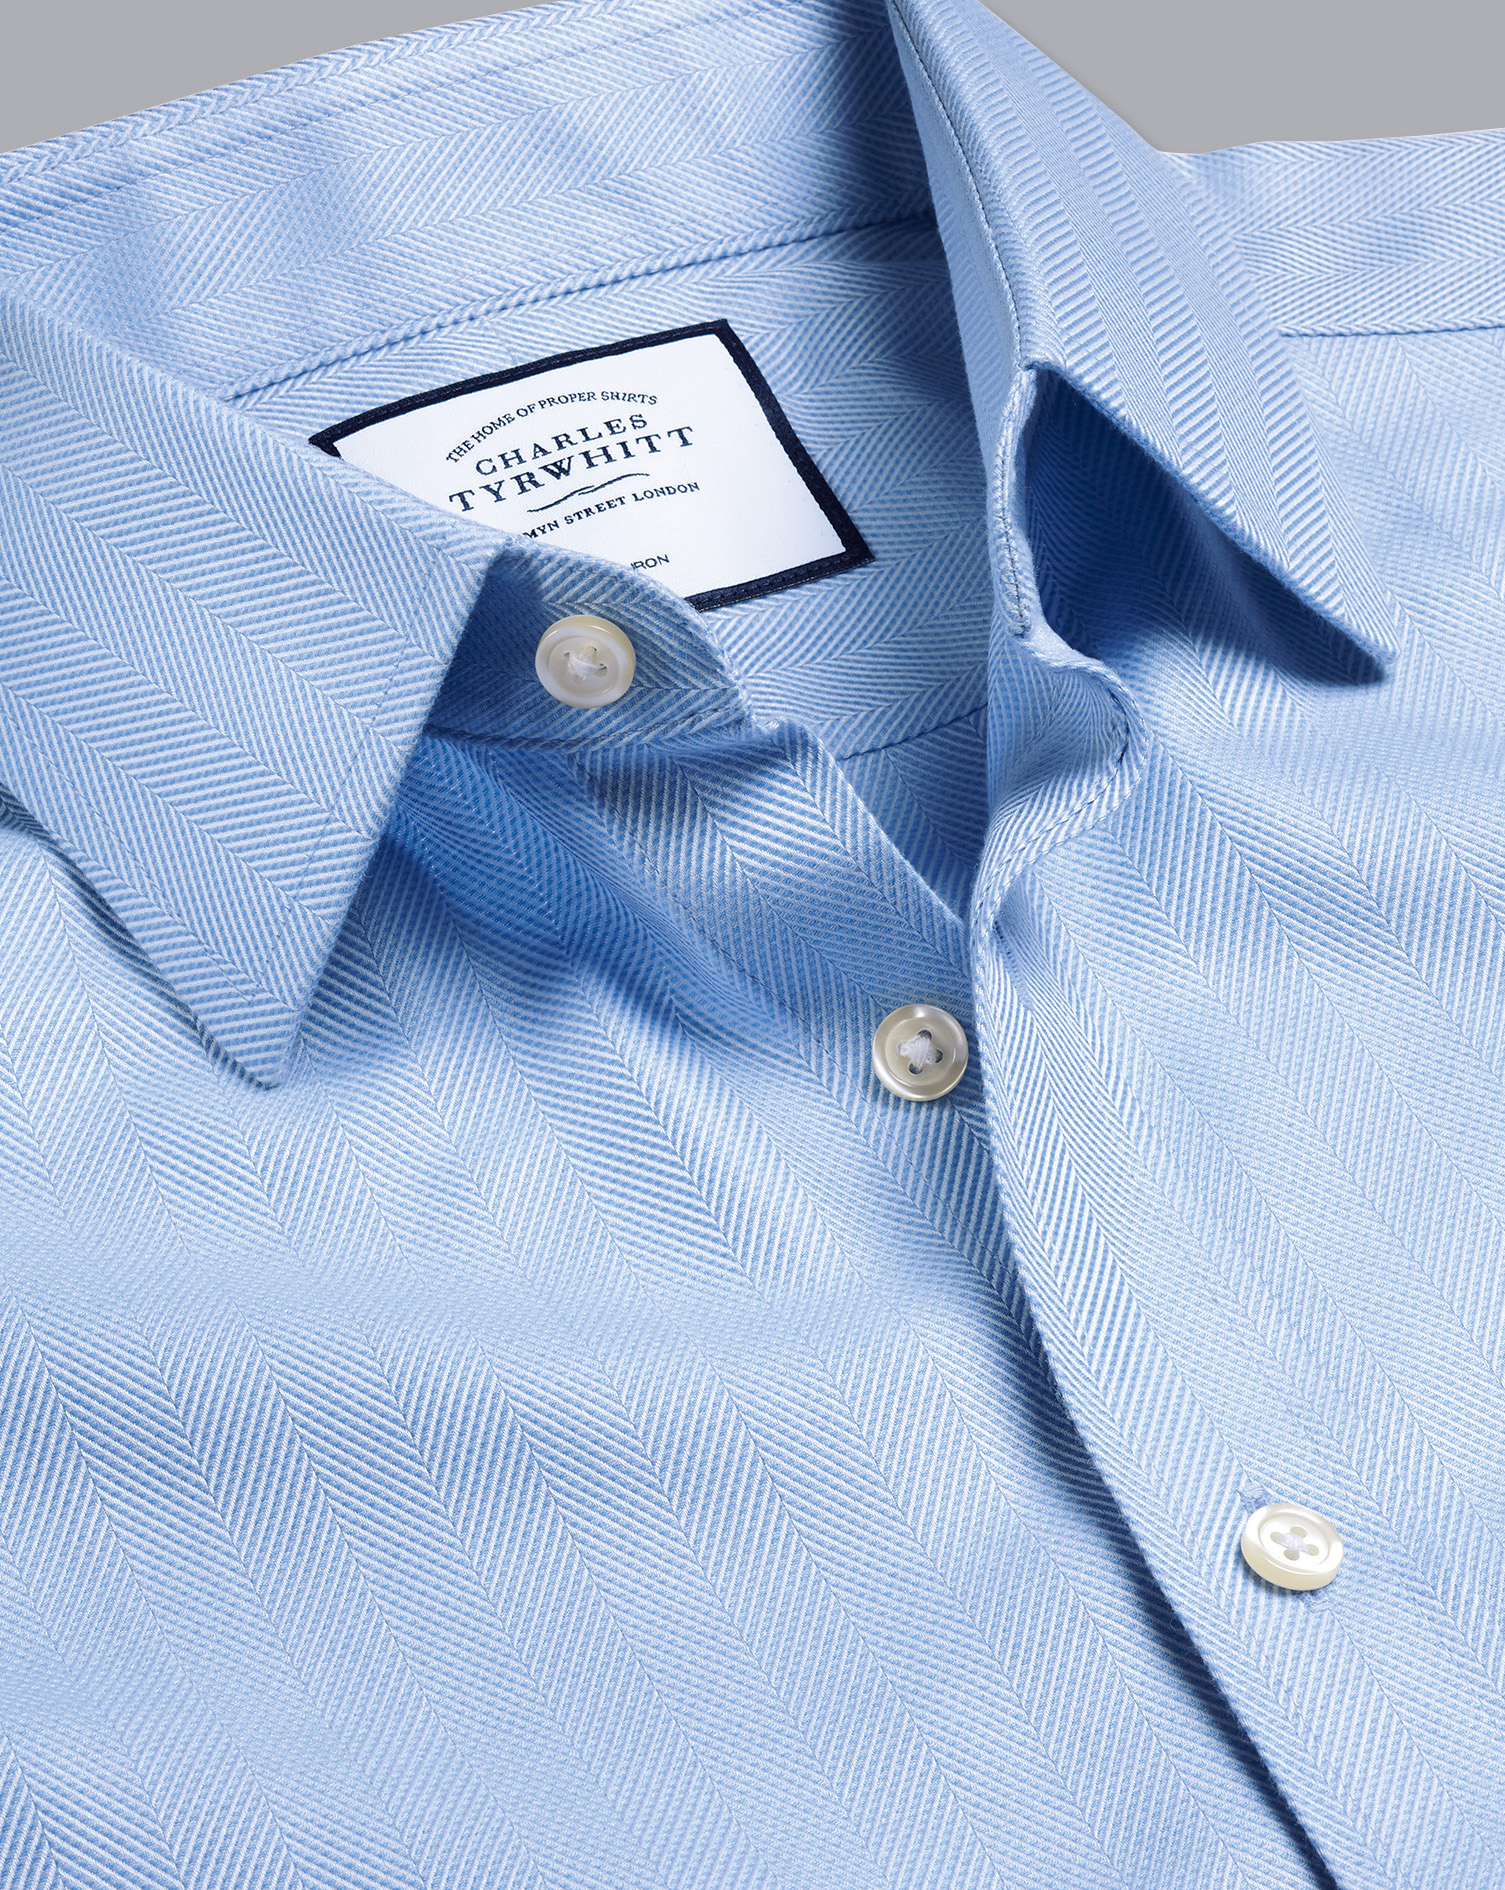 Men's Charles Tyrwhitt Non-Iron Herringbone Dress Shirt - Sky Blue French Cuff Size Medium Cotton
